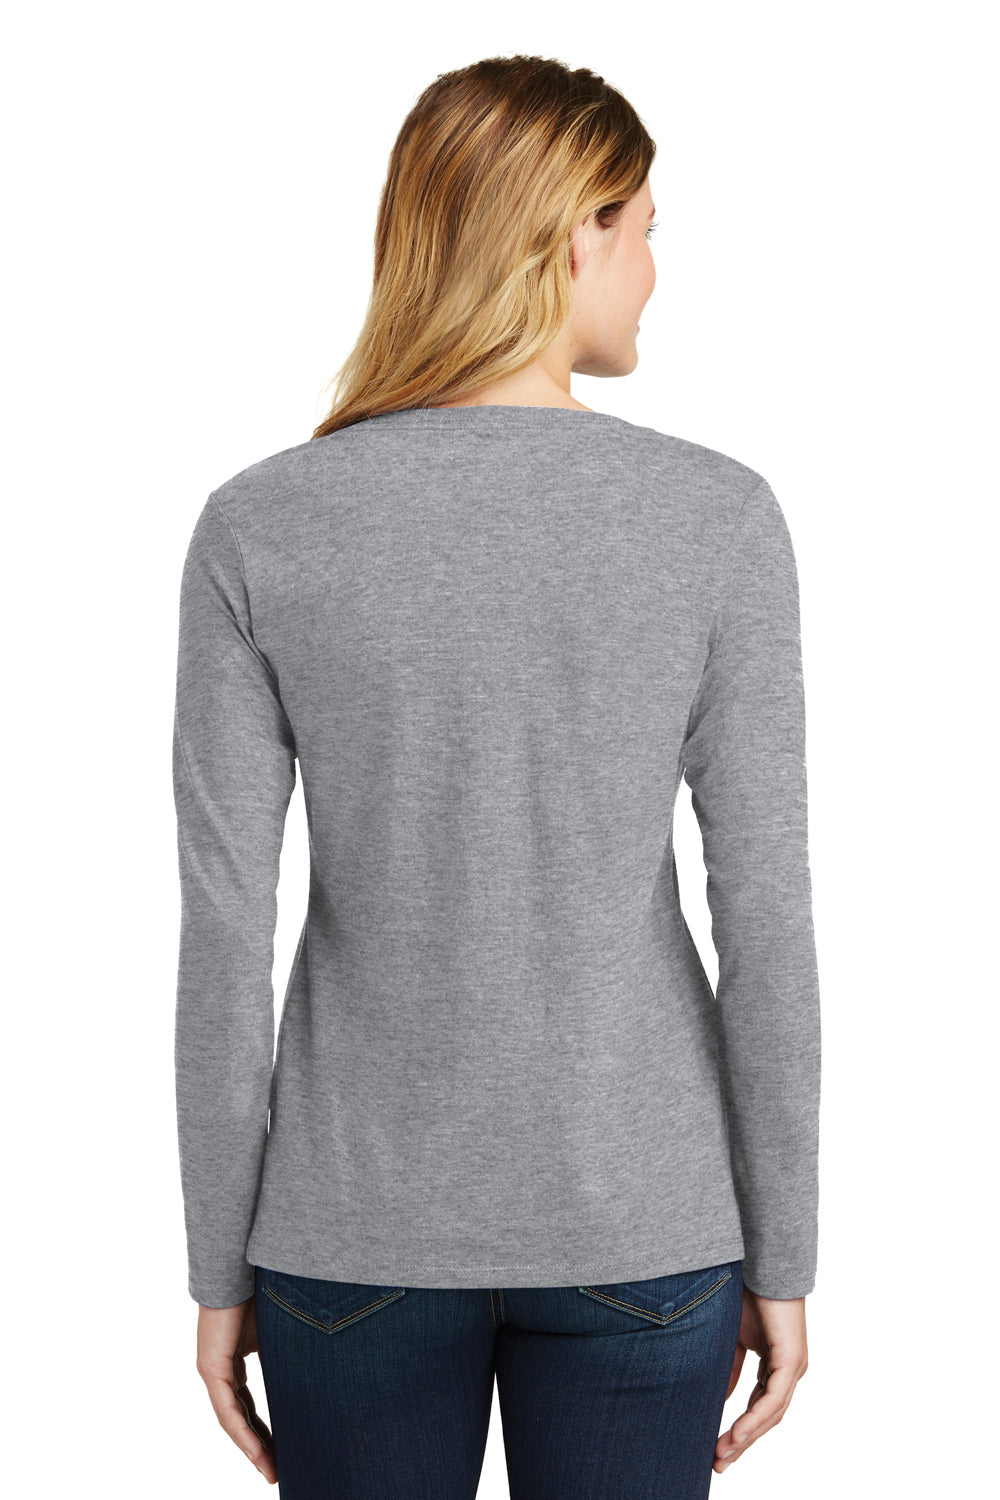 Port & Company LPC450VLS Womens Fan Favorite Long Sleeve V-Neck T-Shirt Heather Grey Back